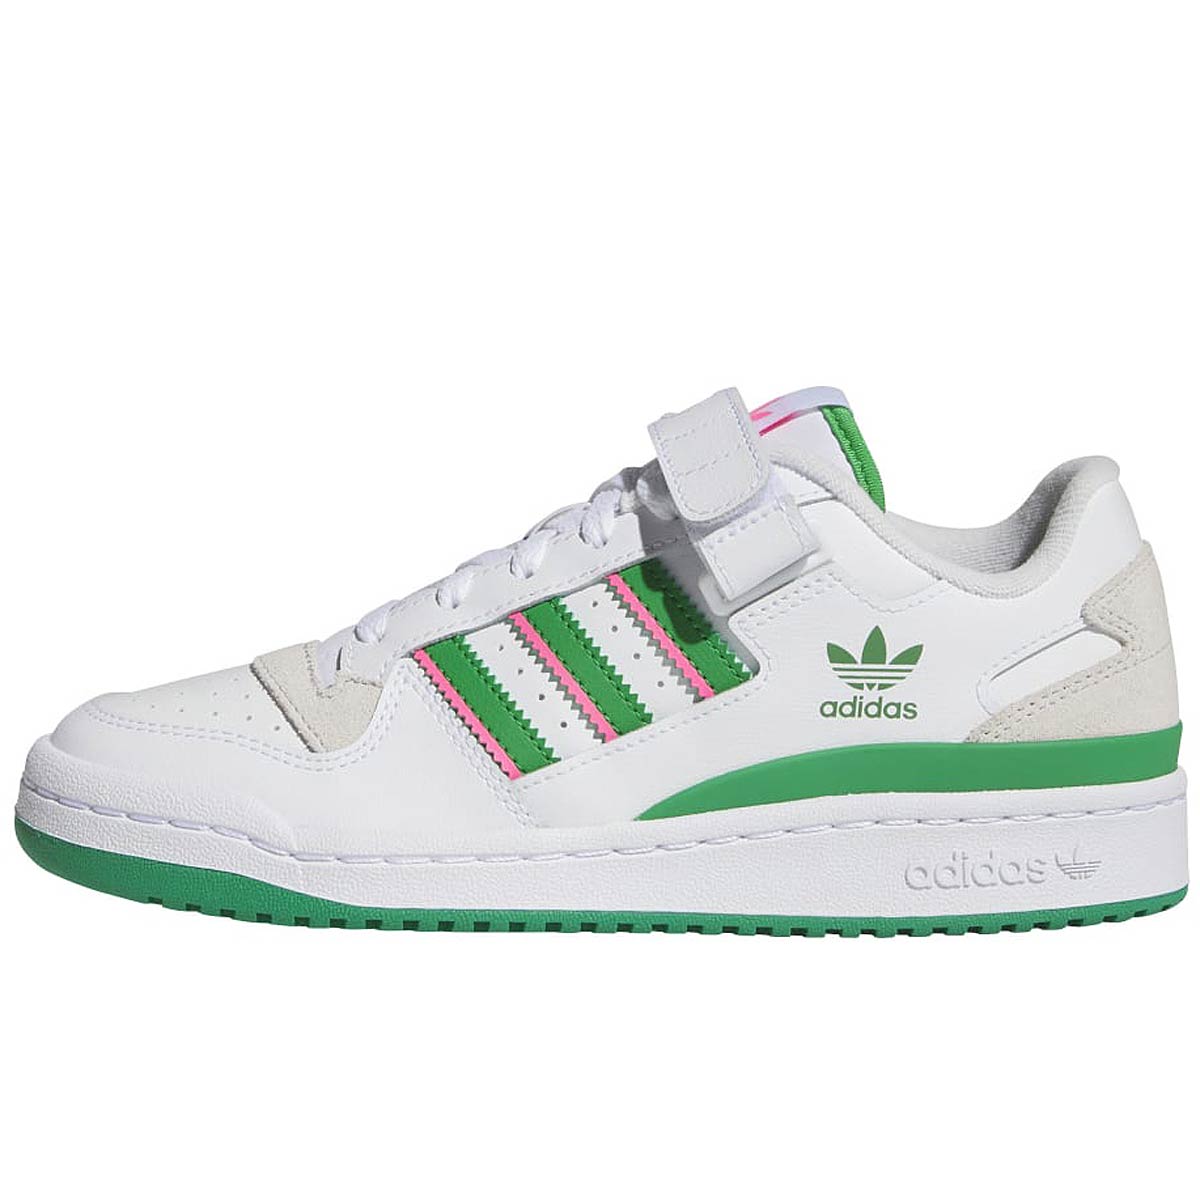 Image of Adidas Forum Low W, White/green/pink